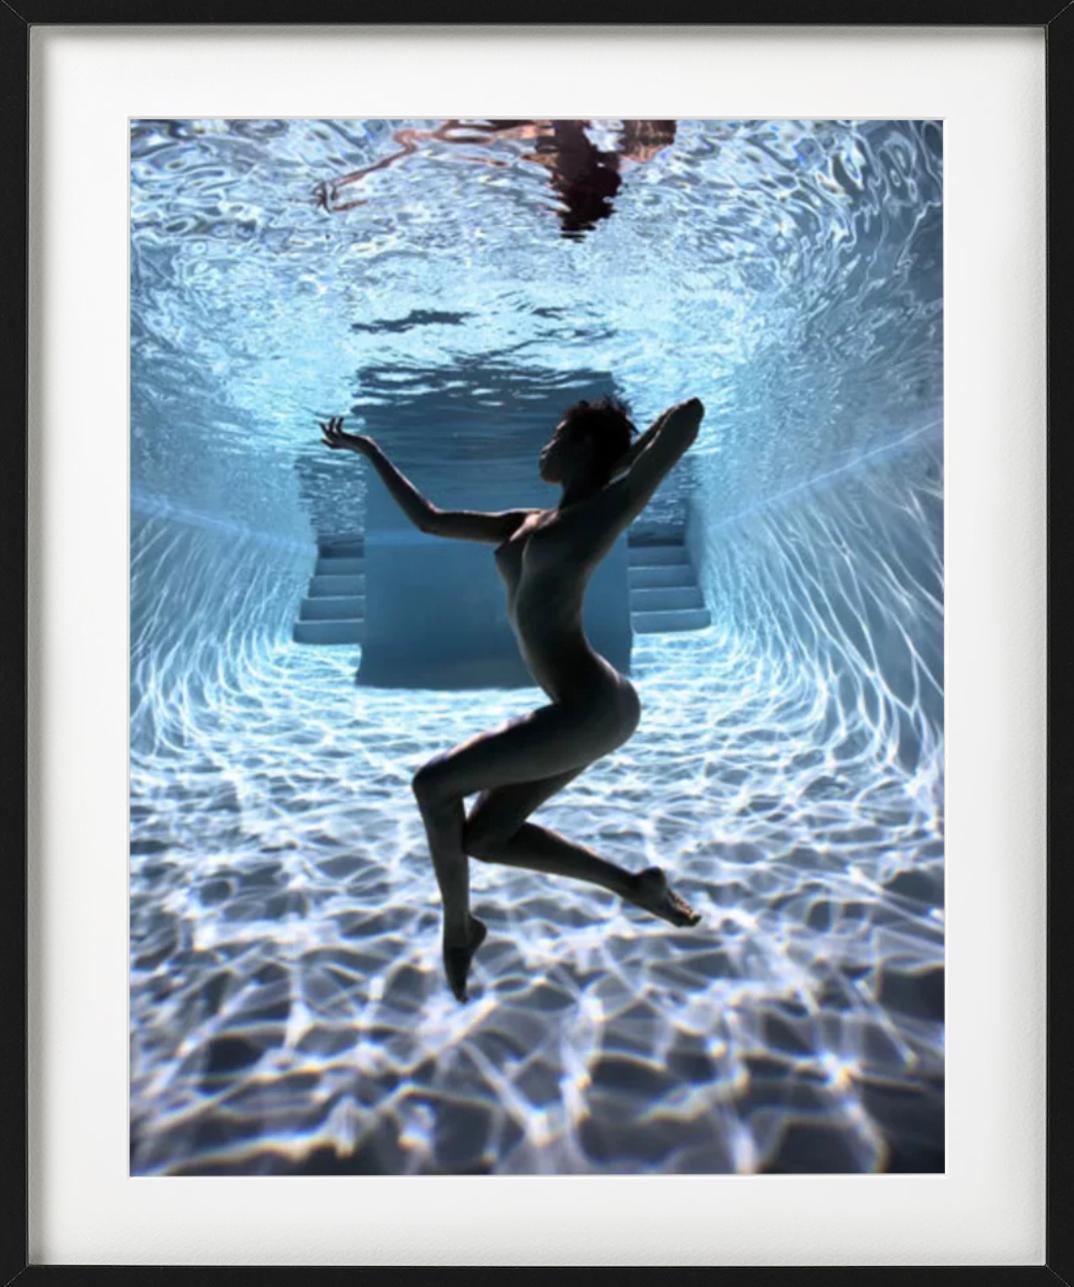 Underwater Study #2826 - Nude Model Posing Underwater in a Pool  - Photograph by Howard Schatz